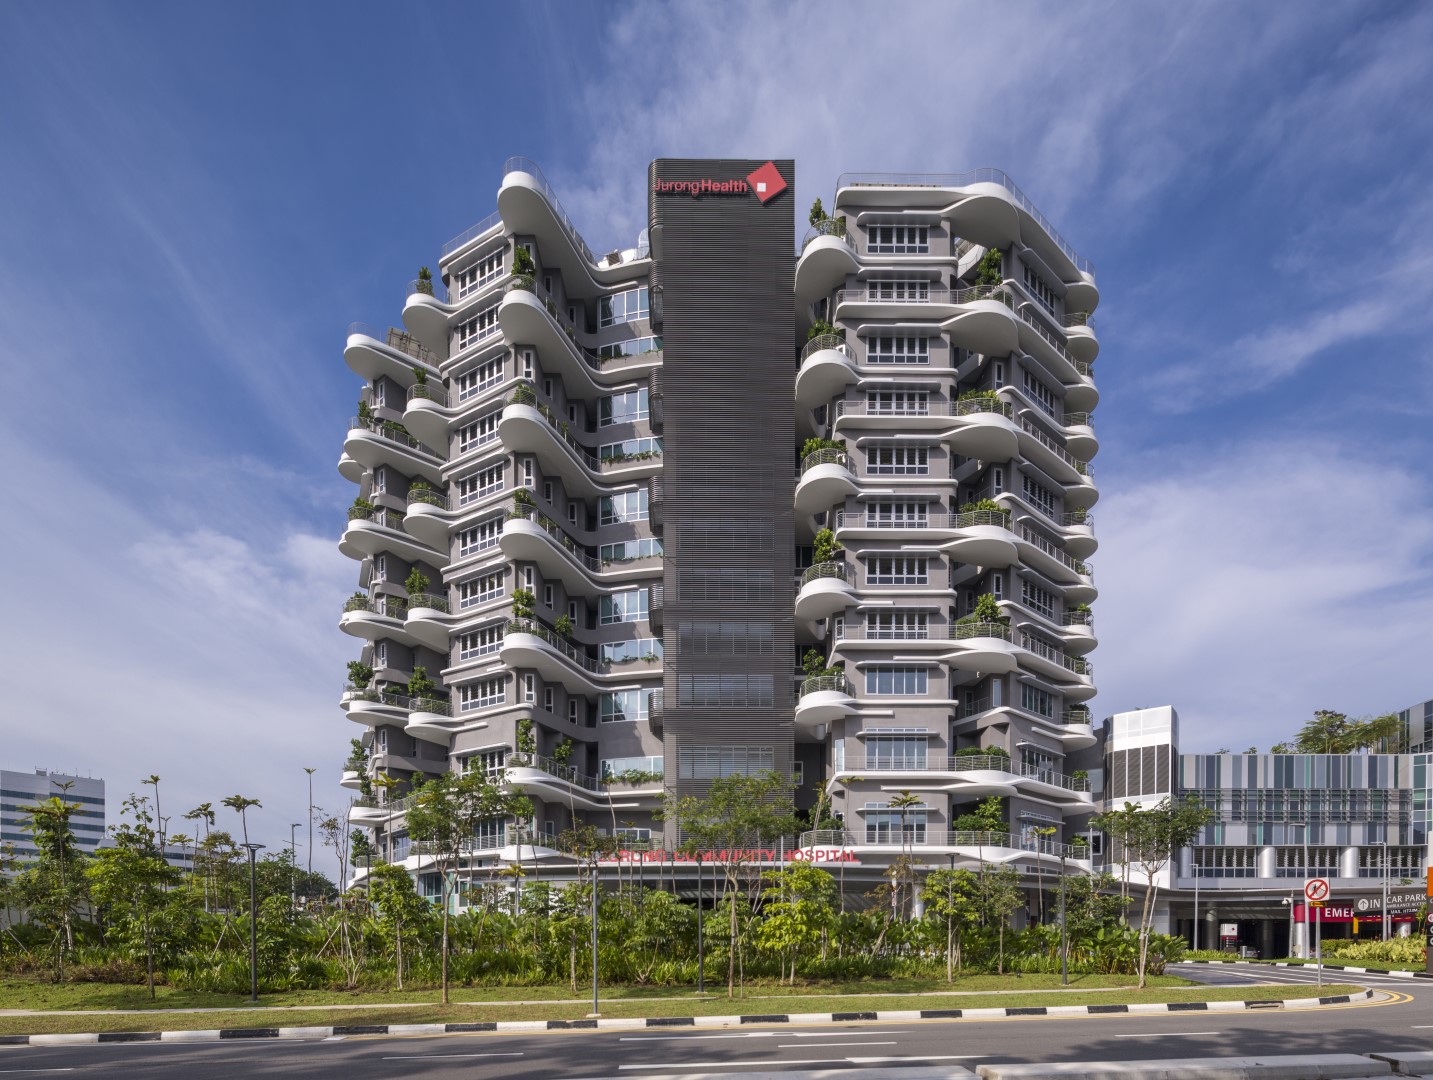 Exterior View of Ng Teng Fong Hospital, Singapore